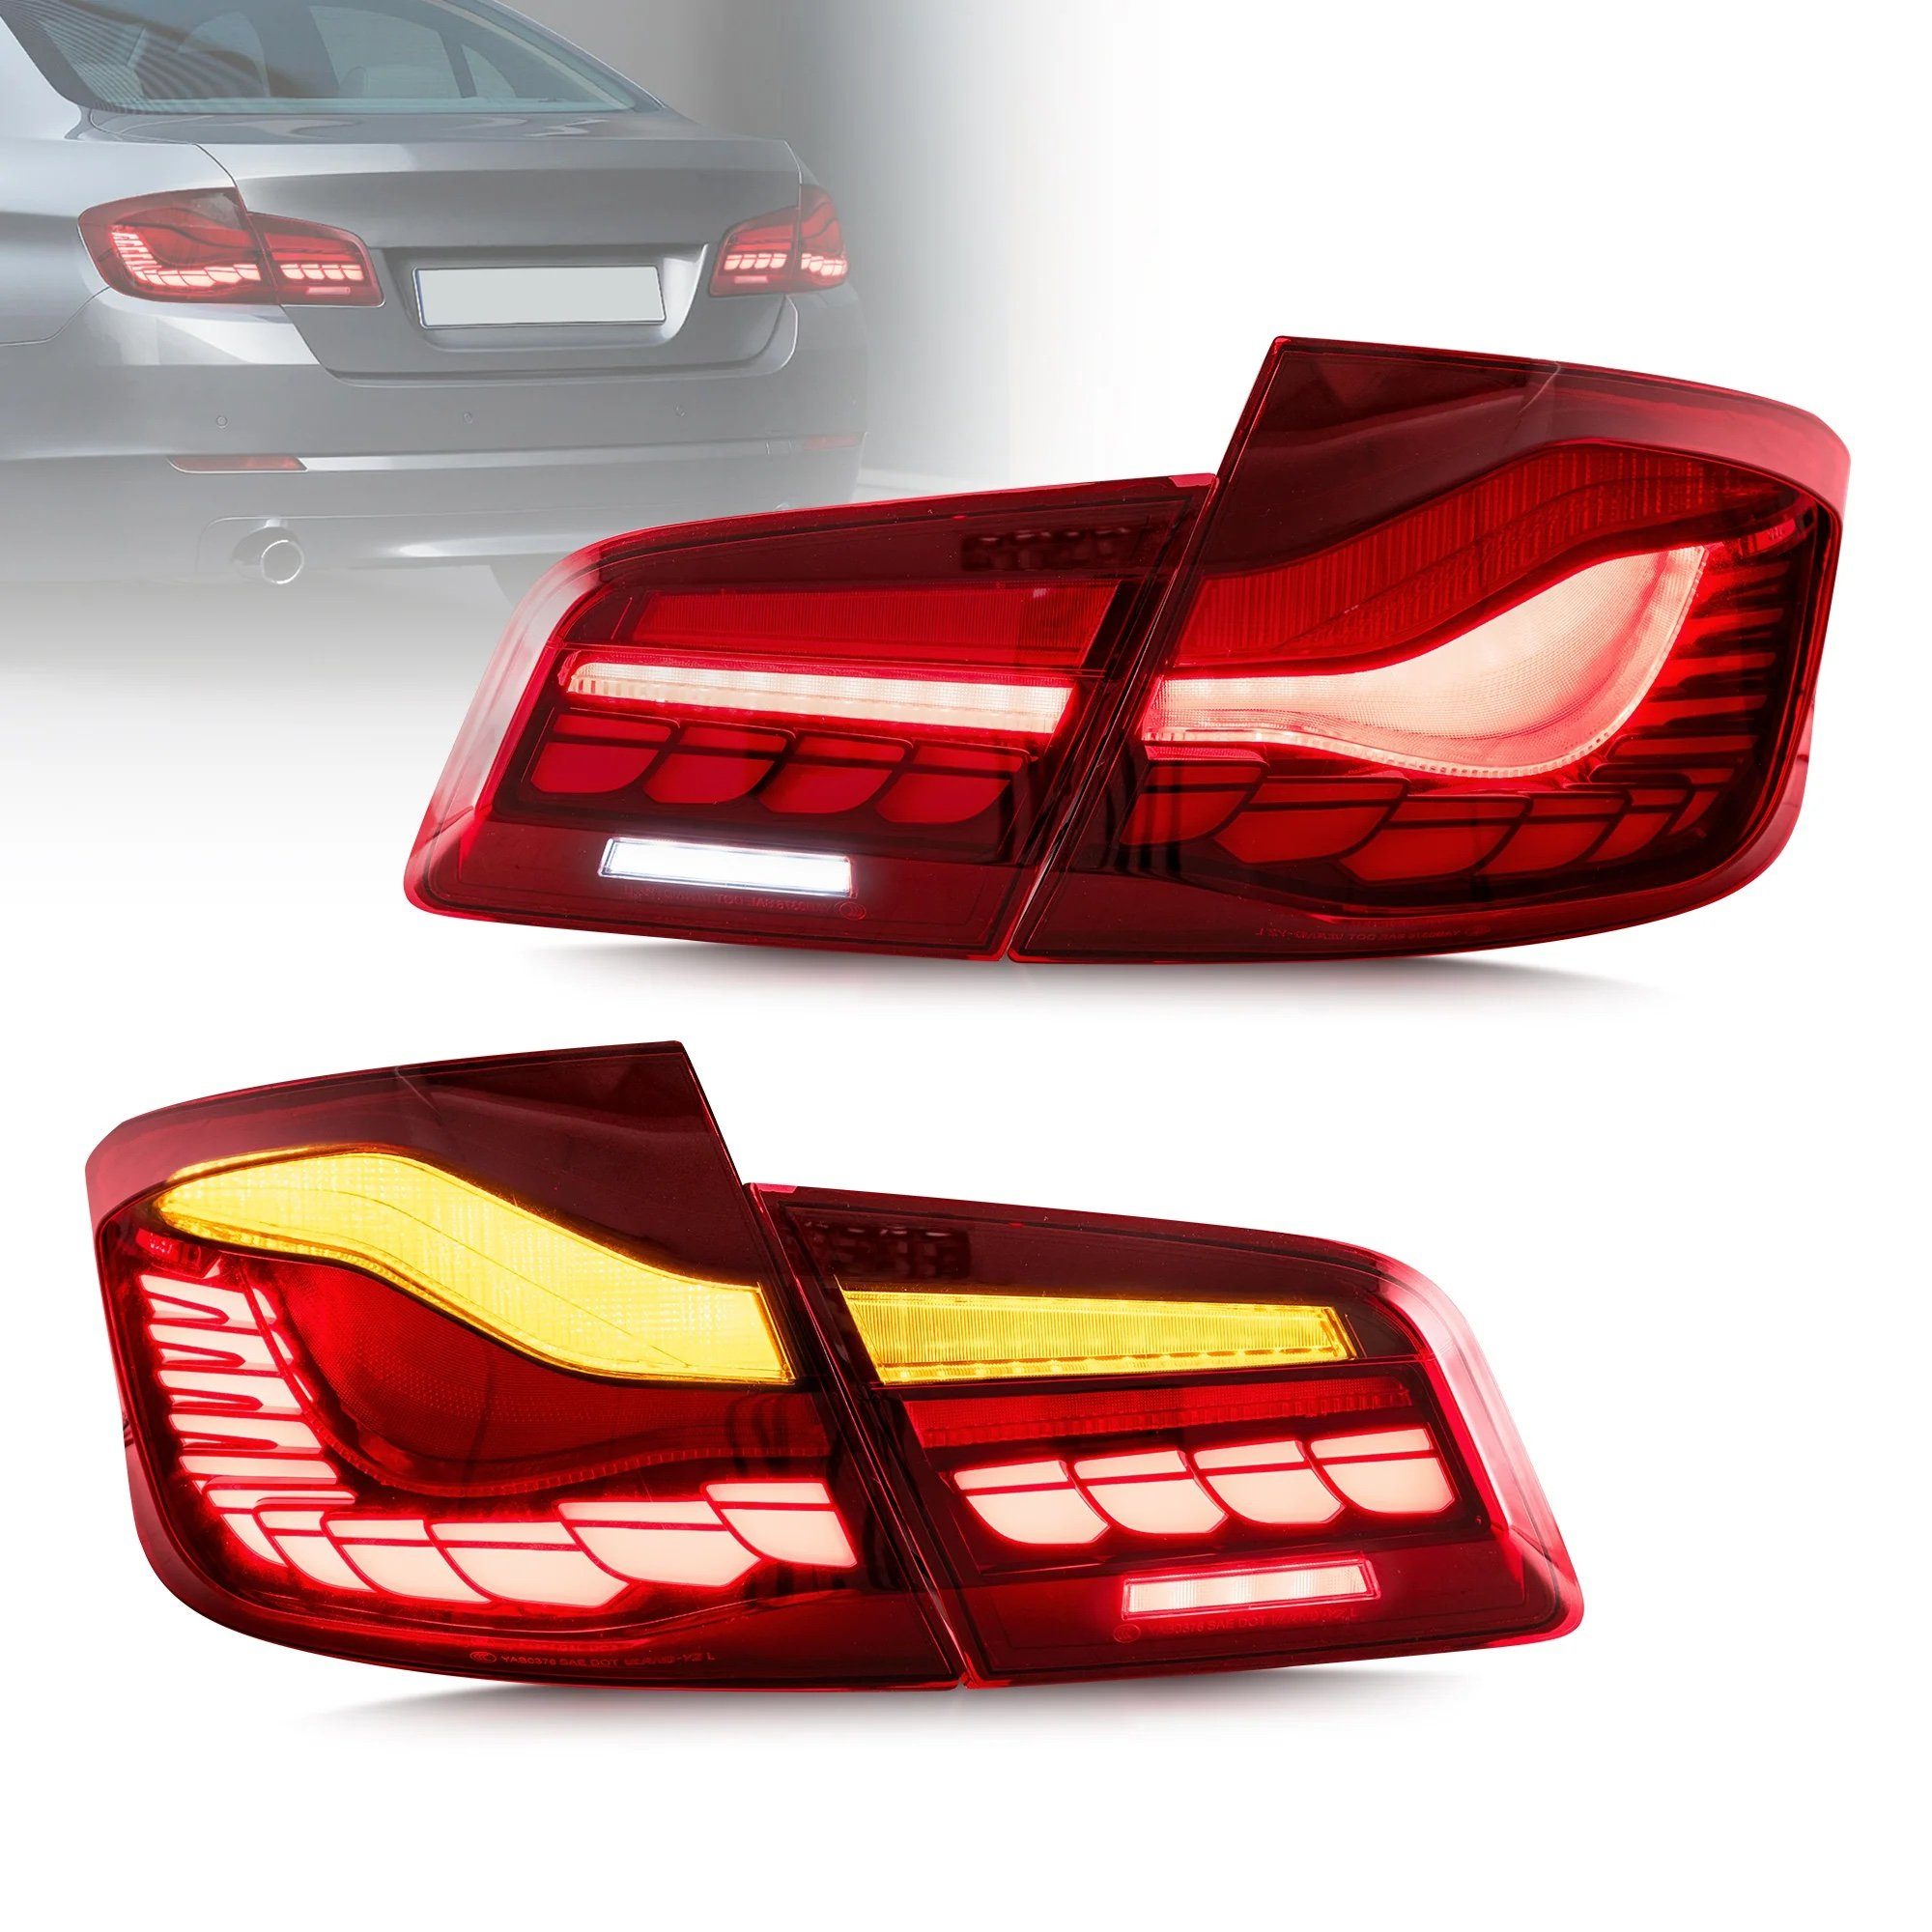 LLCTOOLS Rückleuchte Voll LED Rückleuchten für BMW F10 Limousine 2010-Rot in OLED Technik, LED fest integriert